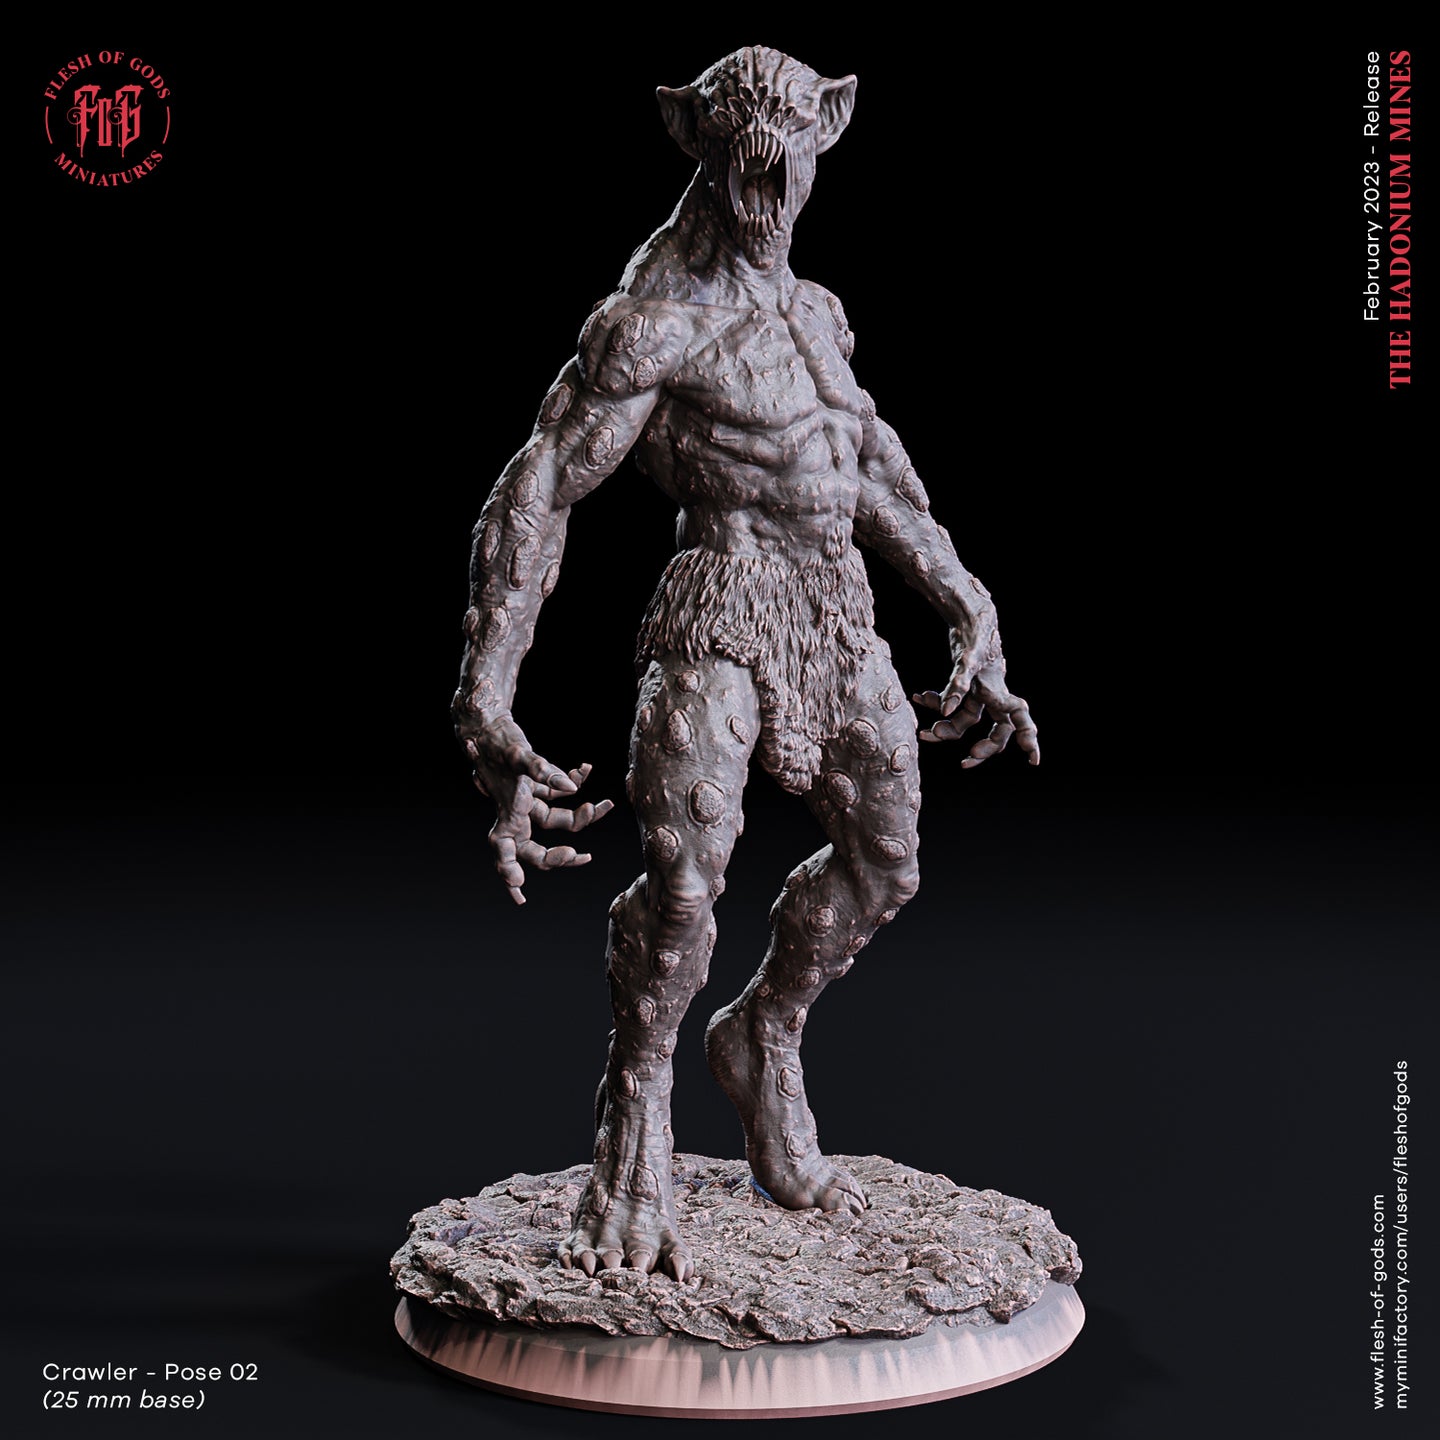 Crawler 2 - The Hadonium Mines - Flesh of Gods - Wargaming D&D DnD